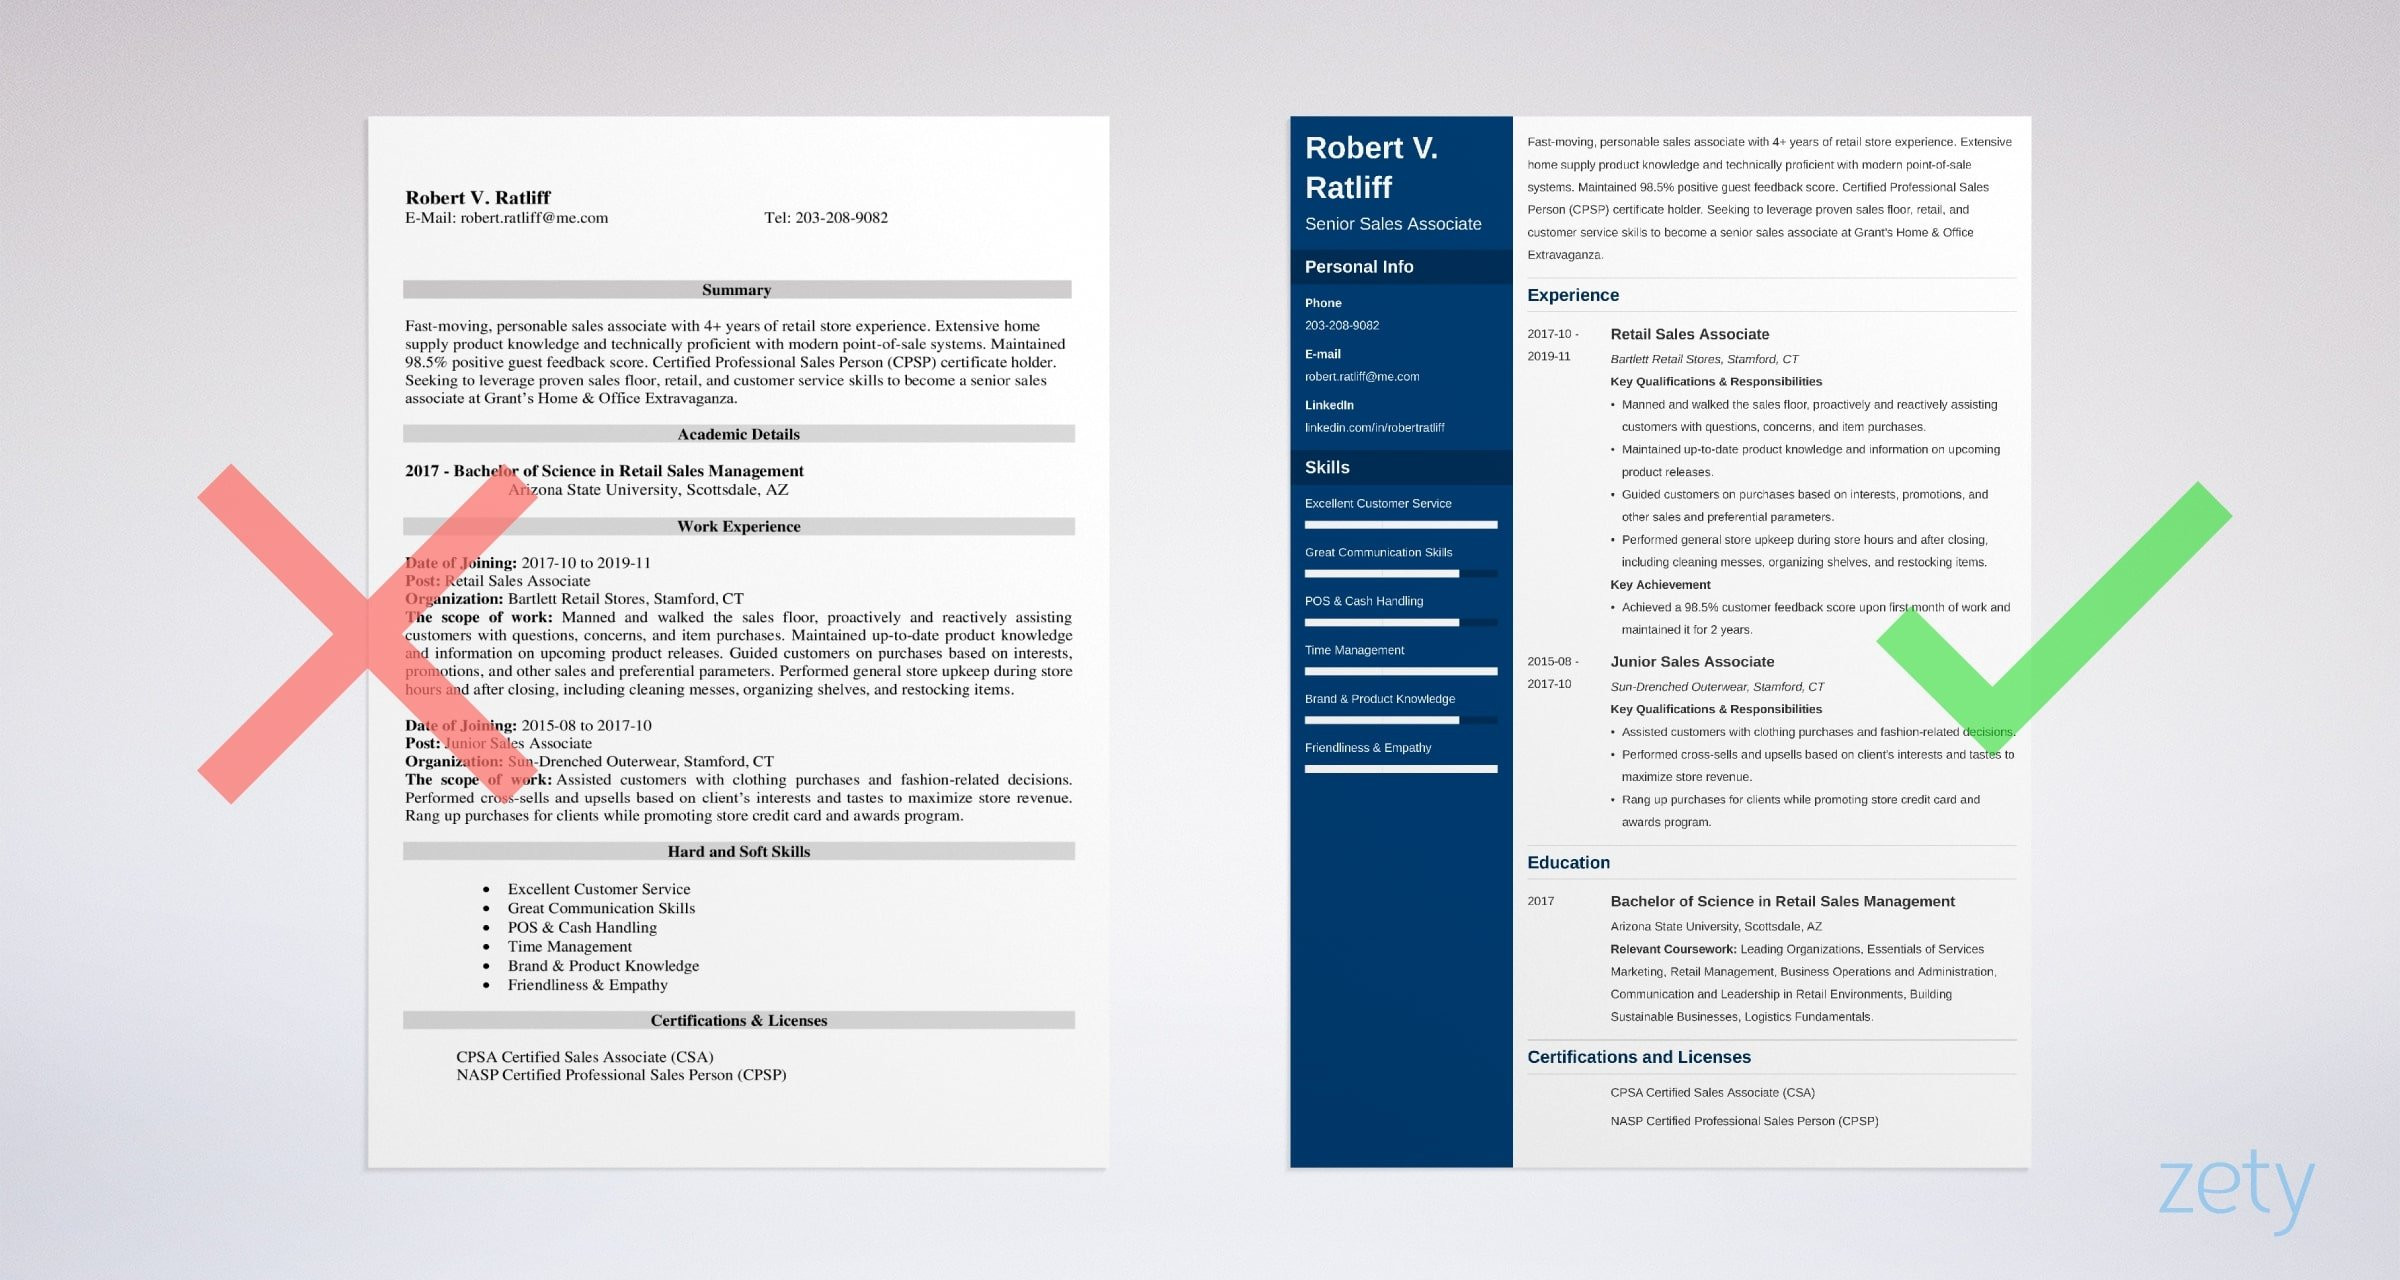 Sales Sheets Task In A Marketing Company Resume Sample Sales associate Resume [example   Job Description]